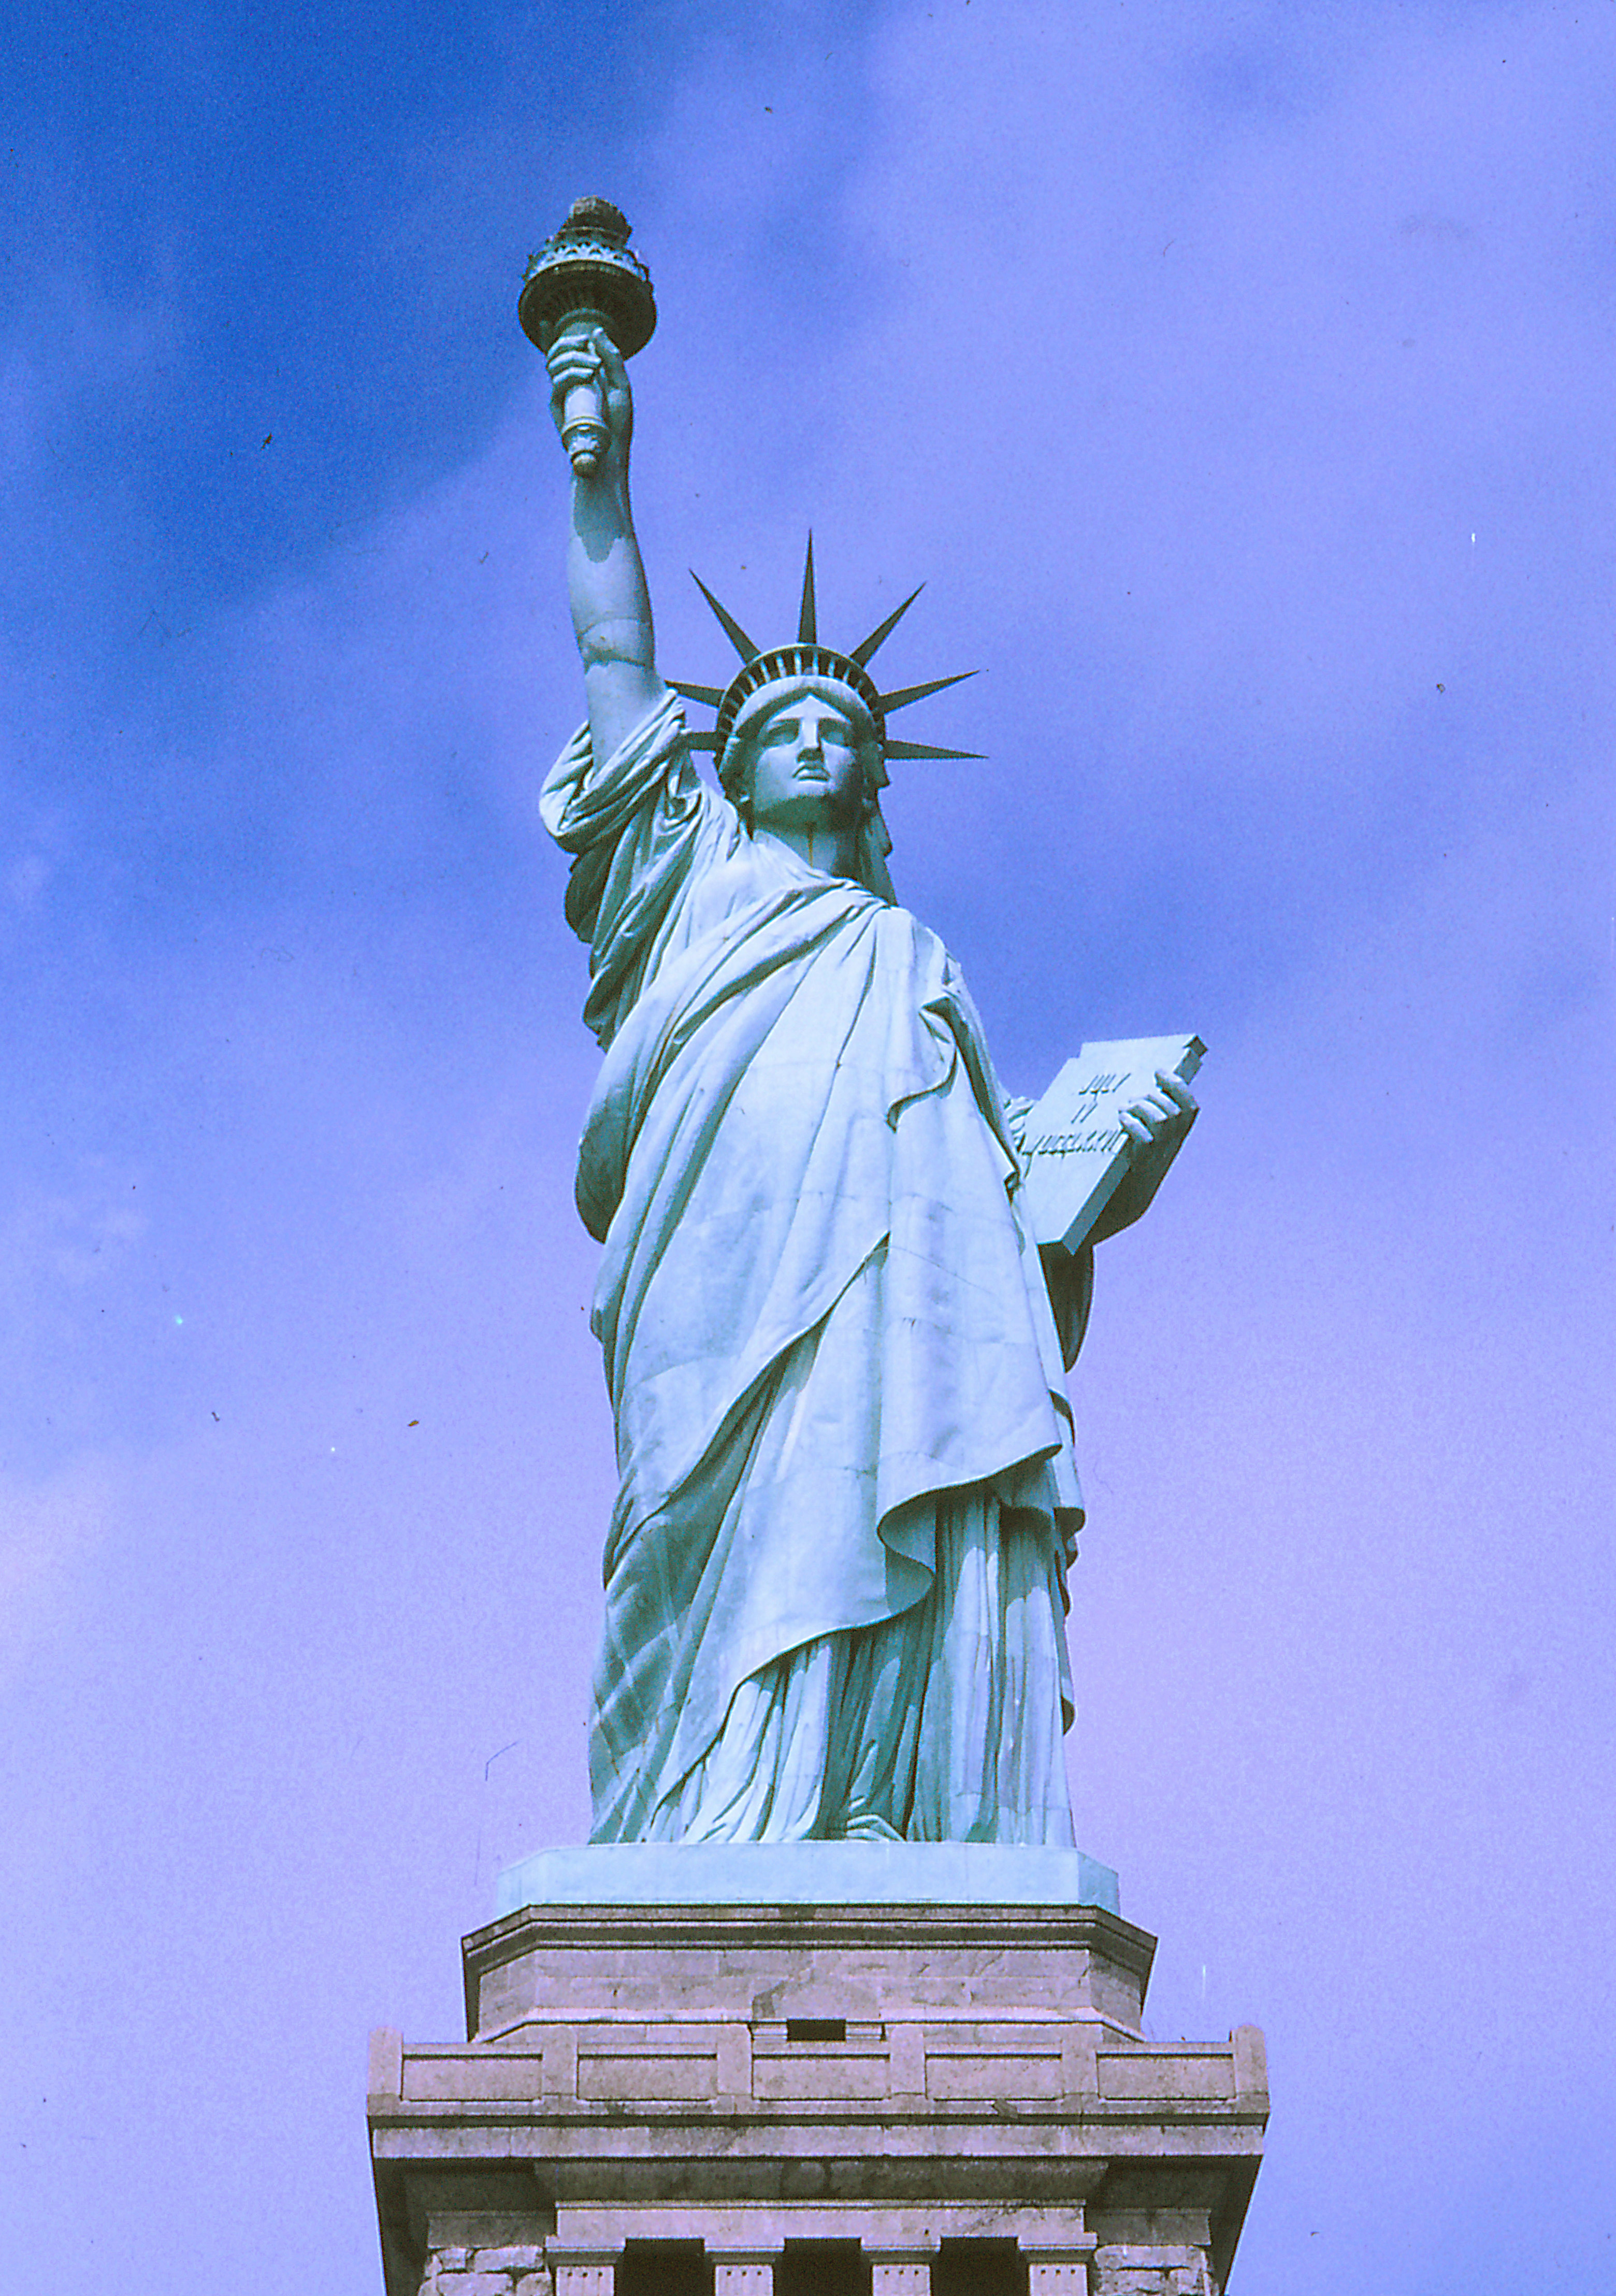 статуя свободы